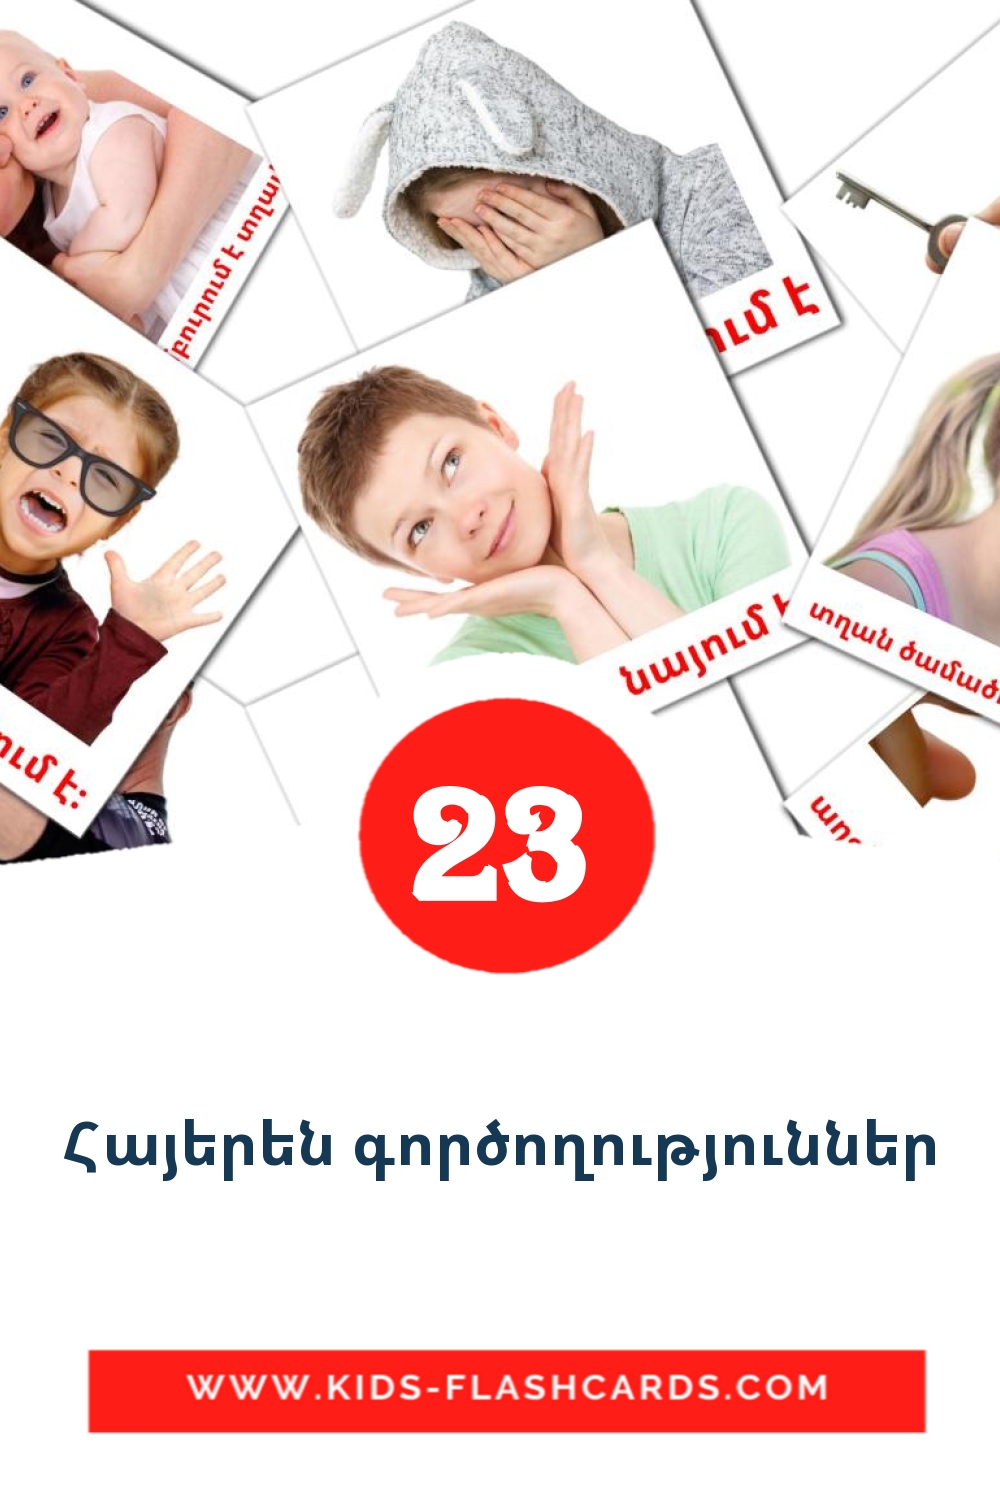 23 Հայերեն գործողություններ fotokaarten voor kleuters in het armeense